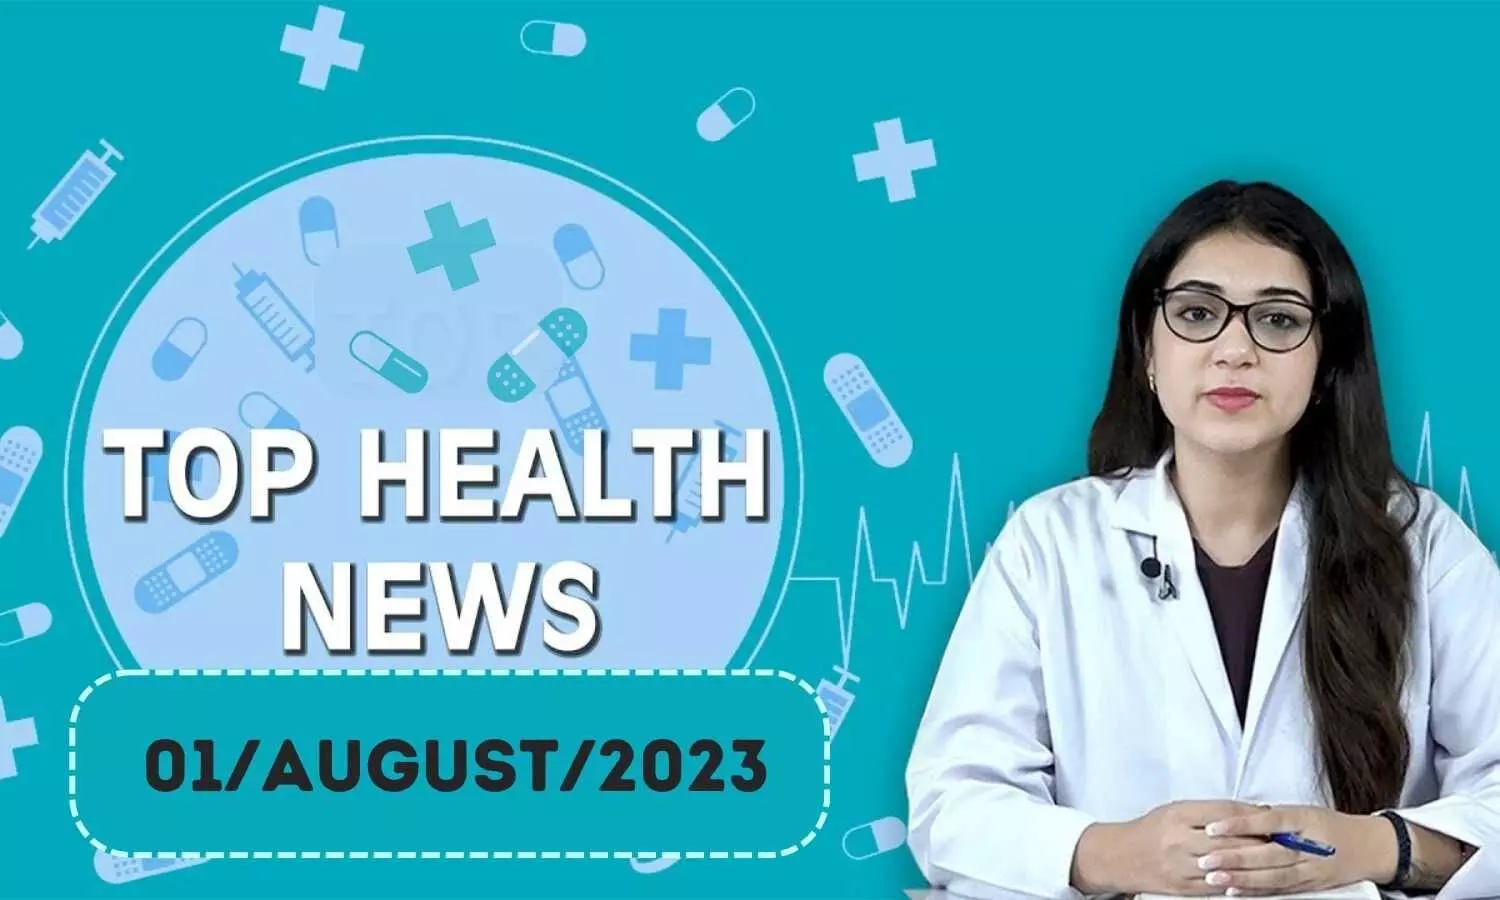 Health Bulletin 01/August/2023